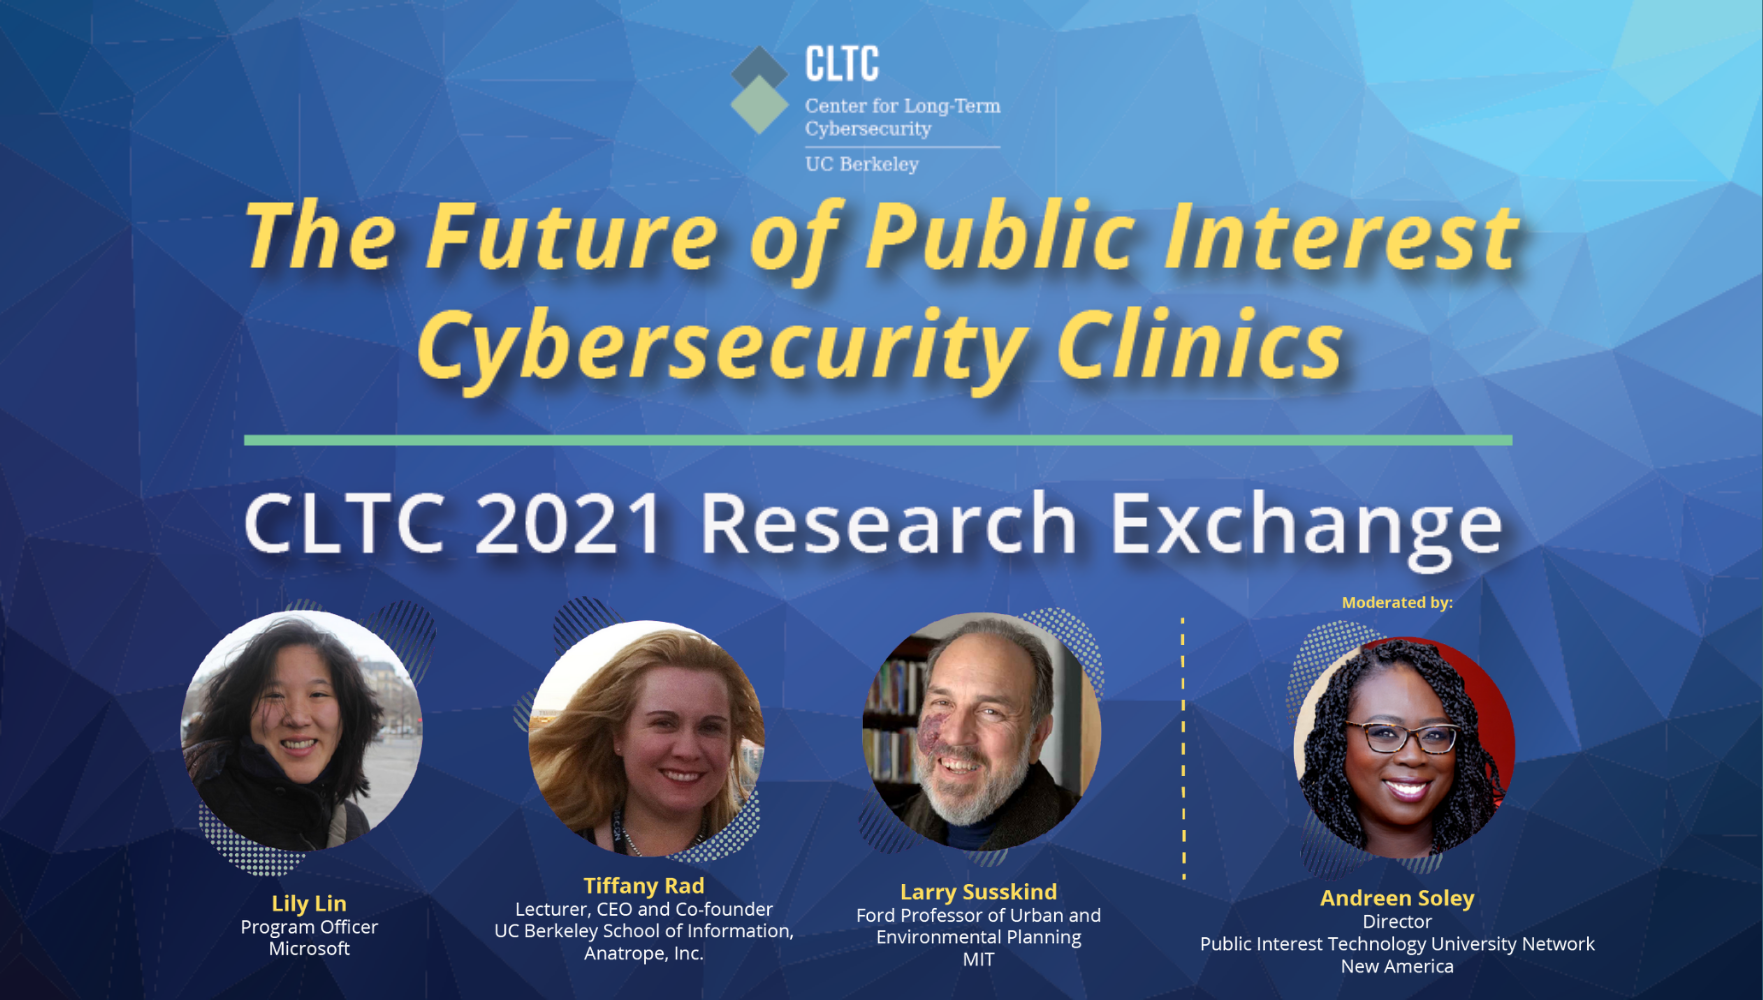 "The Future of Public Interest Cybersecurity Clinics"